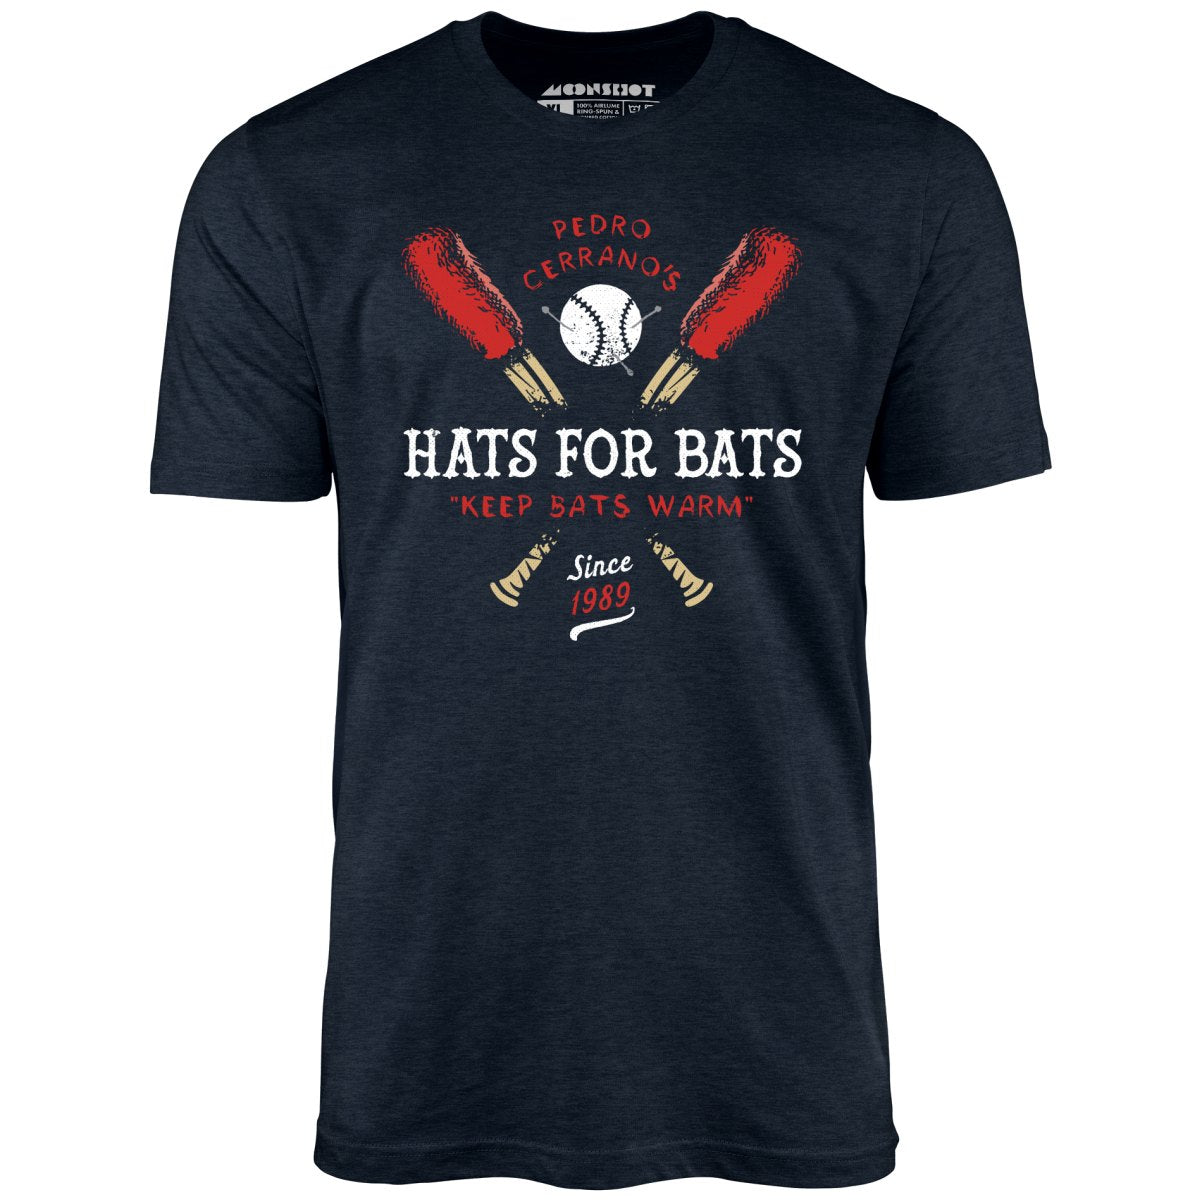 Pedro Cerrano's Hats for Bats - Unisex T-Shirt